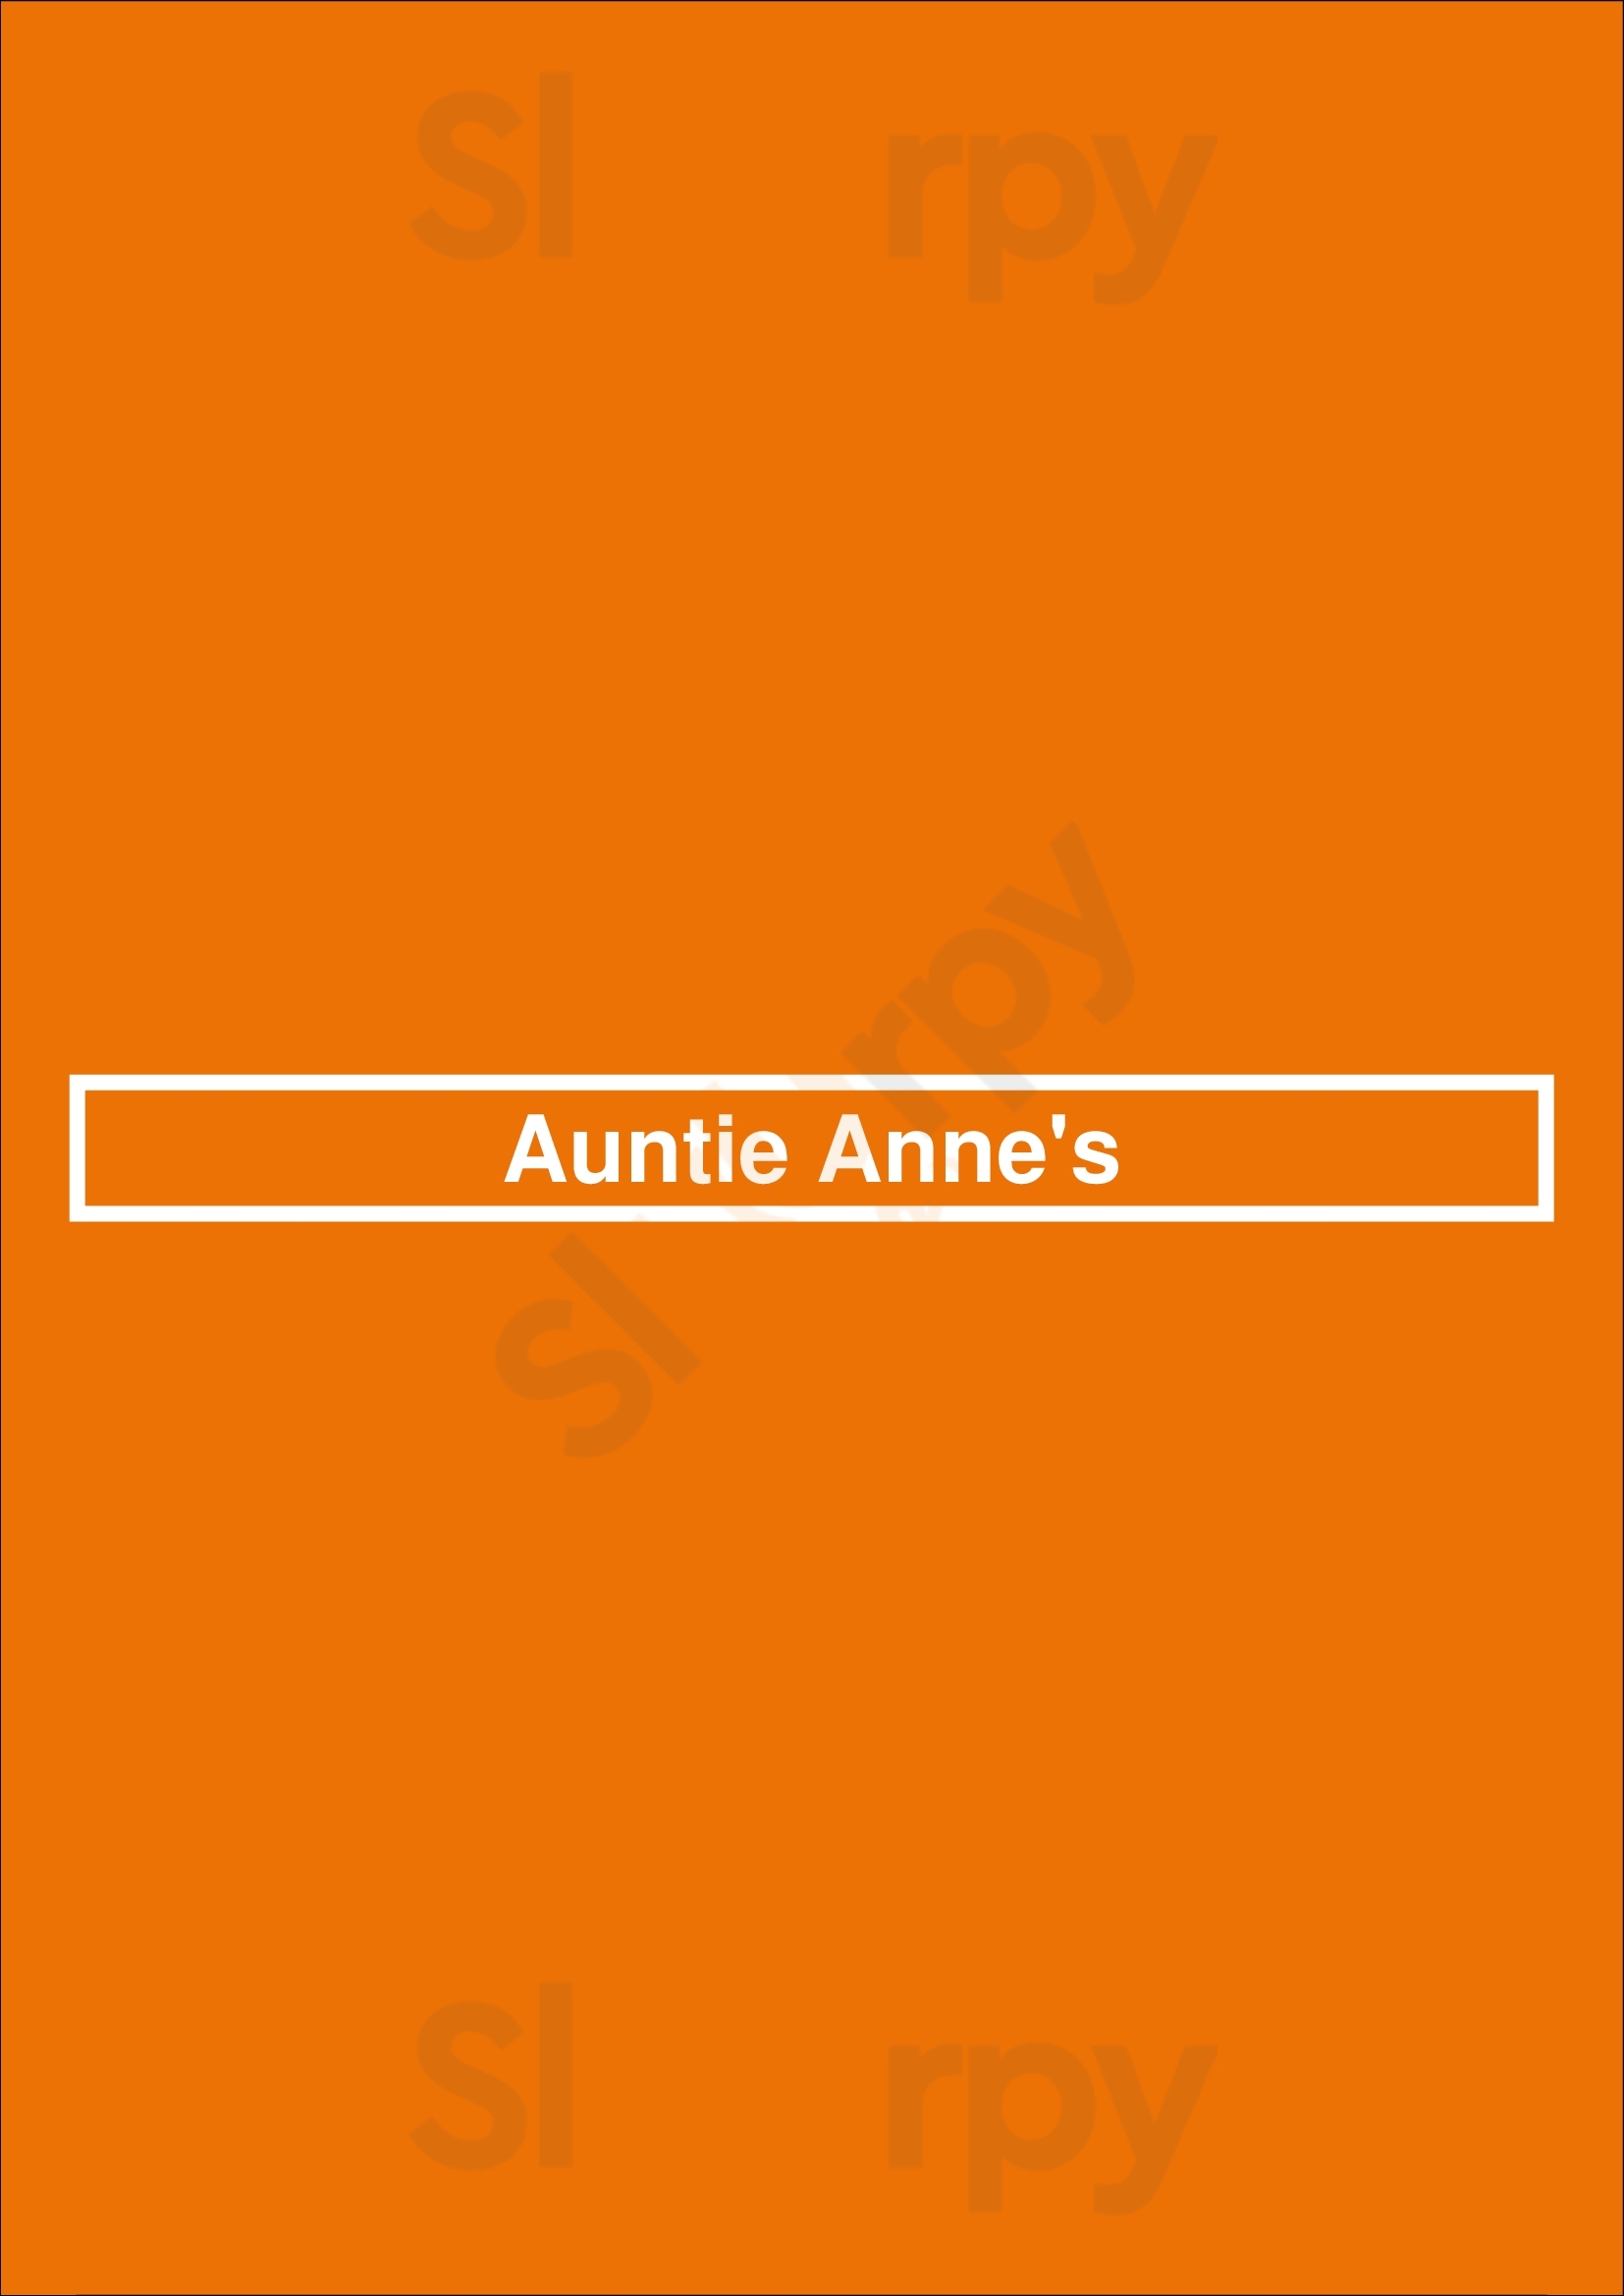 Auntie Anne's Las Vegas Menu - 1